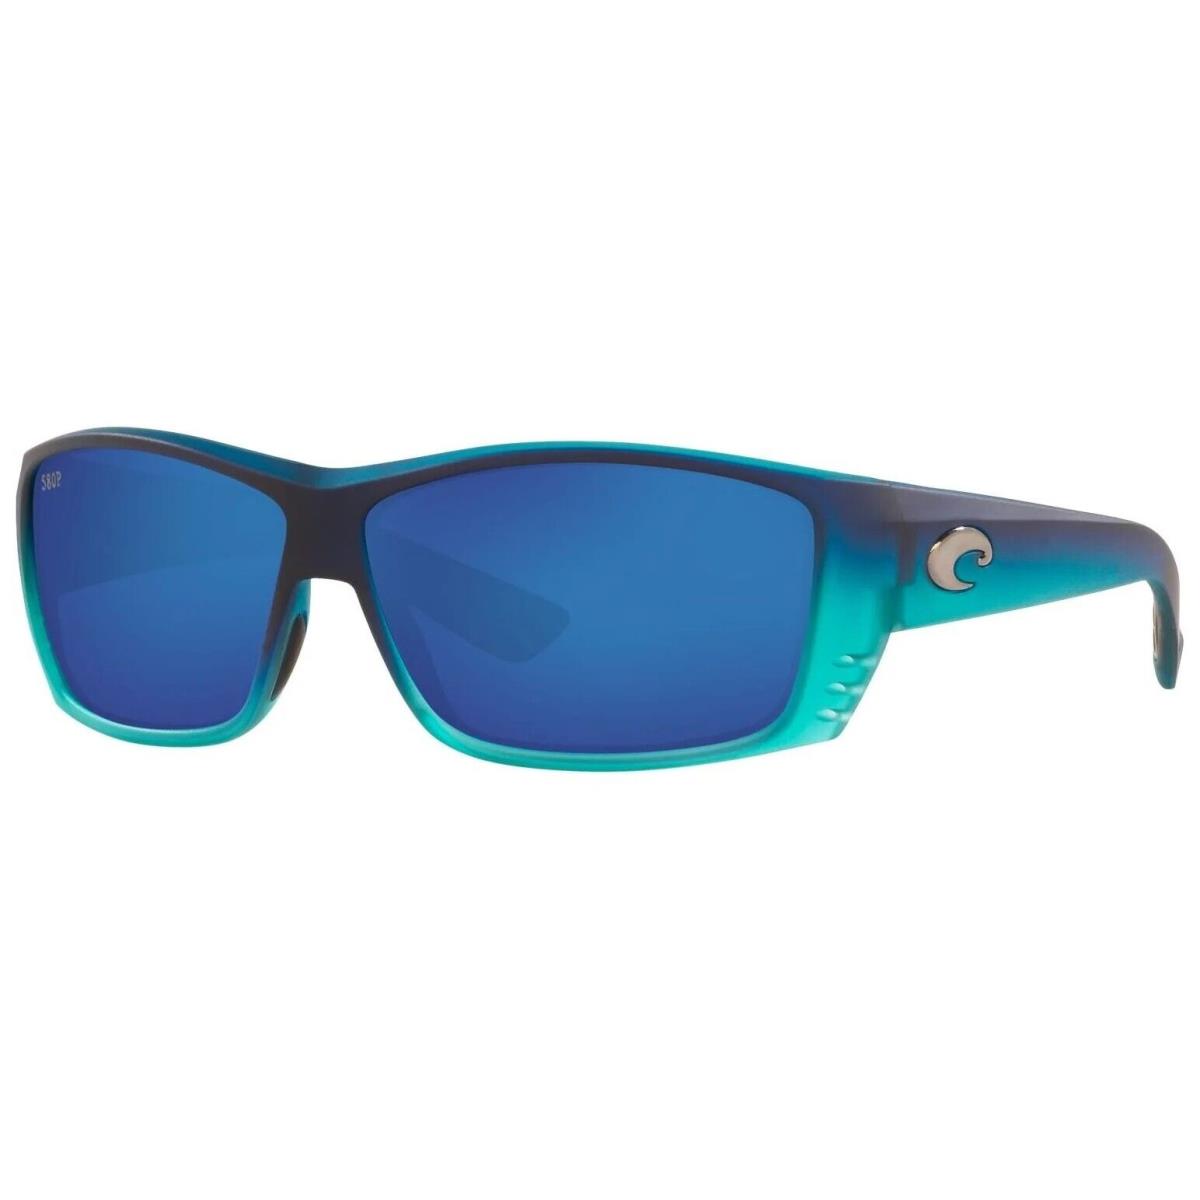 Costa Del Mar Cat Cay Sunglasses Matte Caribbean Fade w/ Blue Mirror 580P Lens - Frame: Blue, Lens: Blue